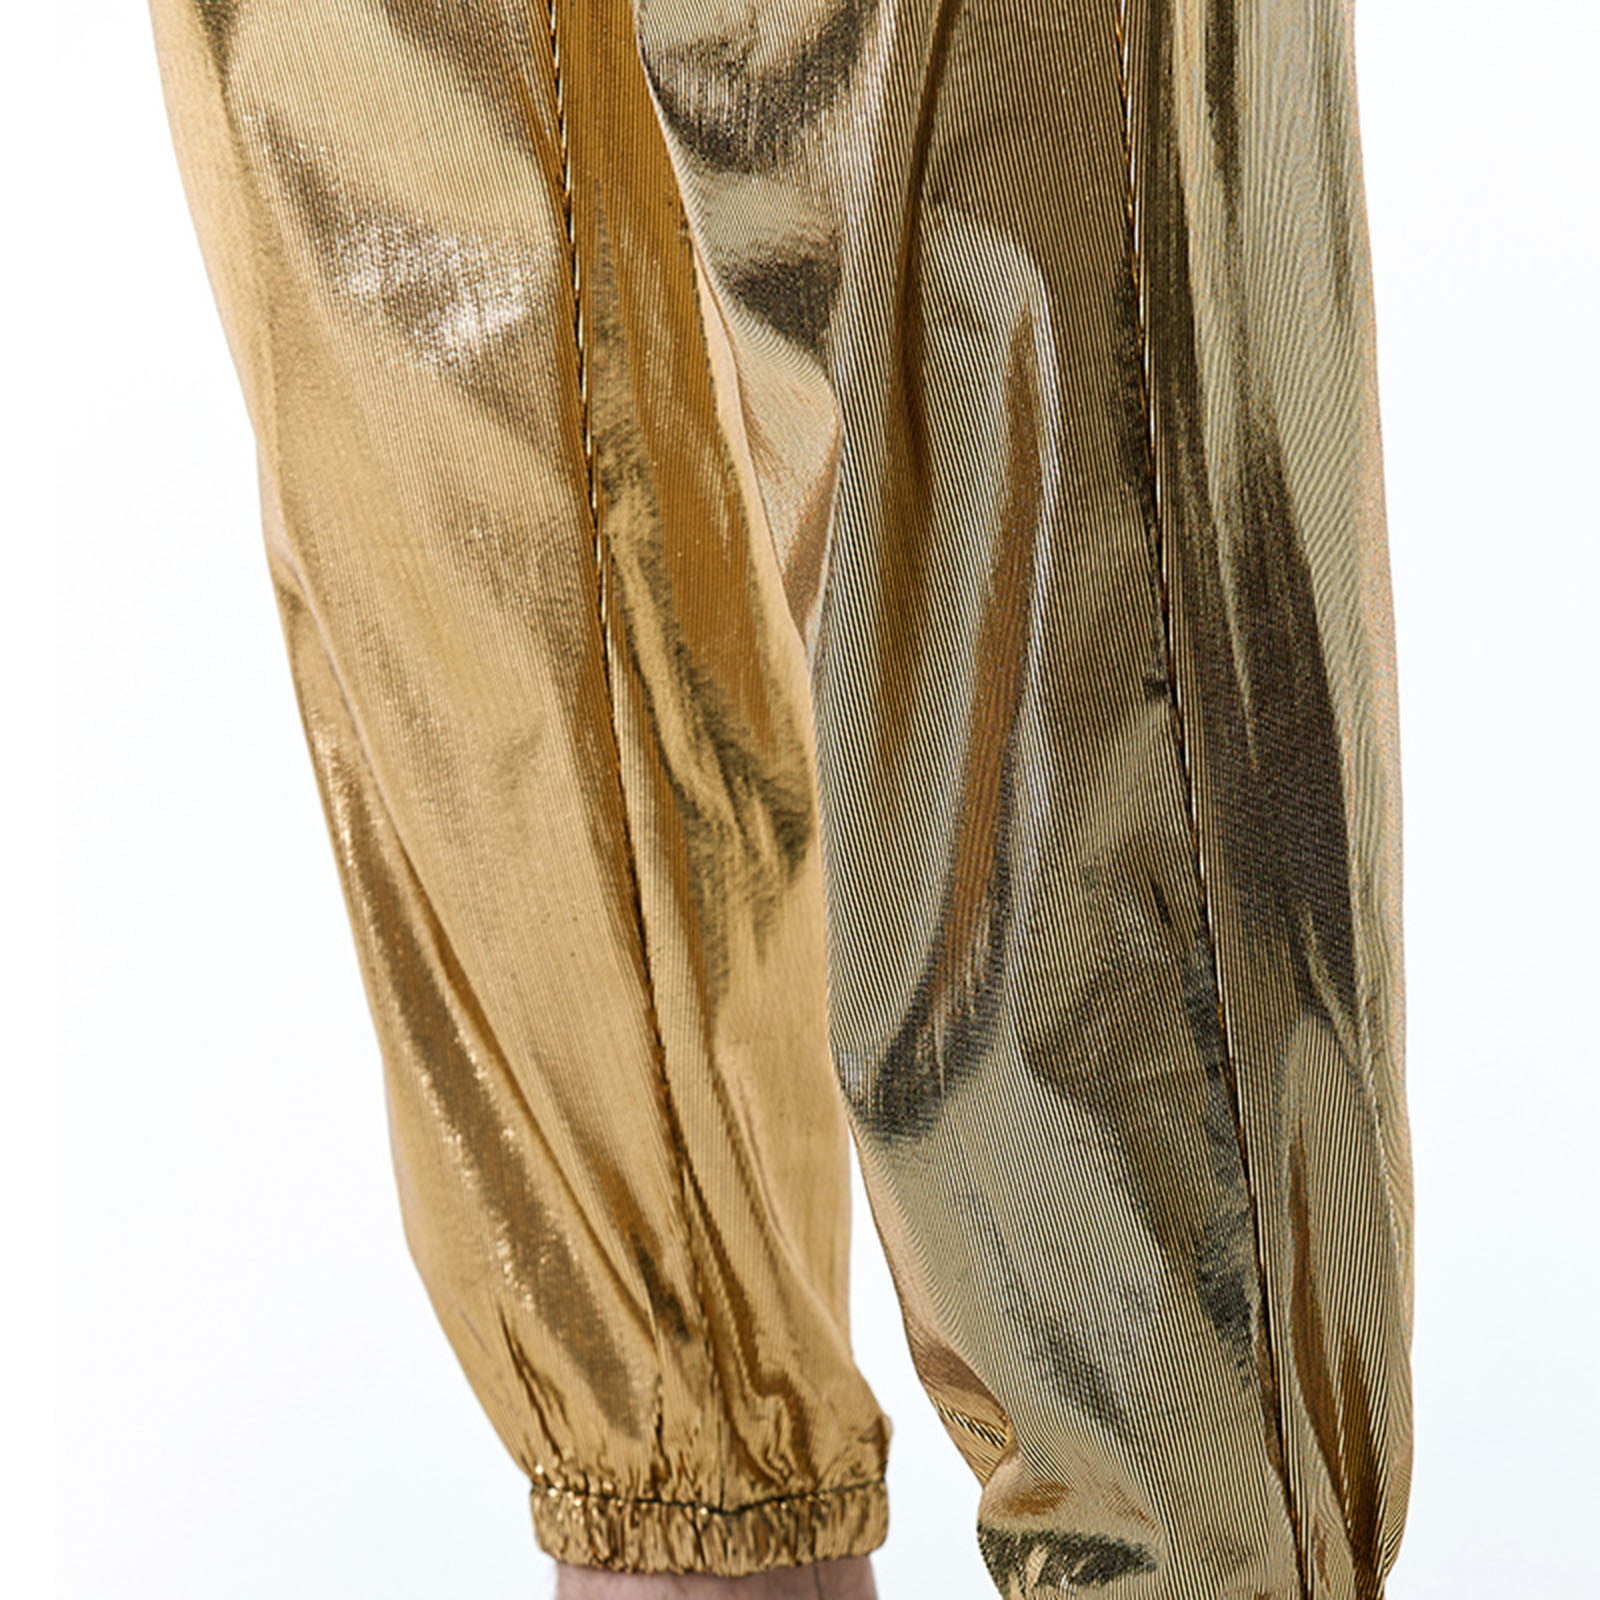 fartey Casual Pants for Men Loose Fit Plaid Print Trousers Lounge Pockets  Straight Leg Drawstring Elastic Waist Pants 